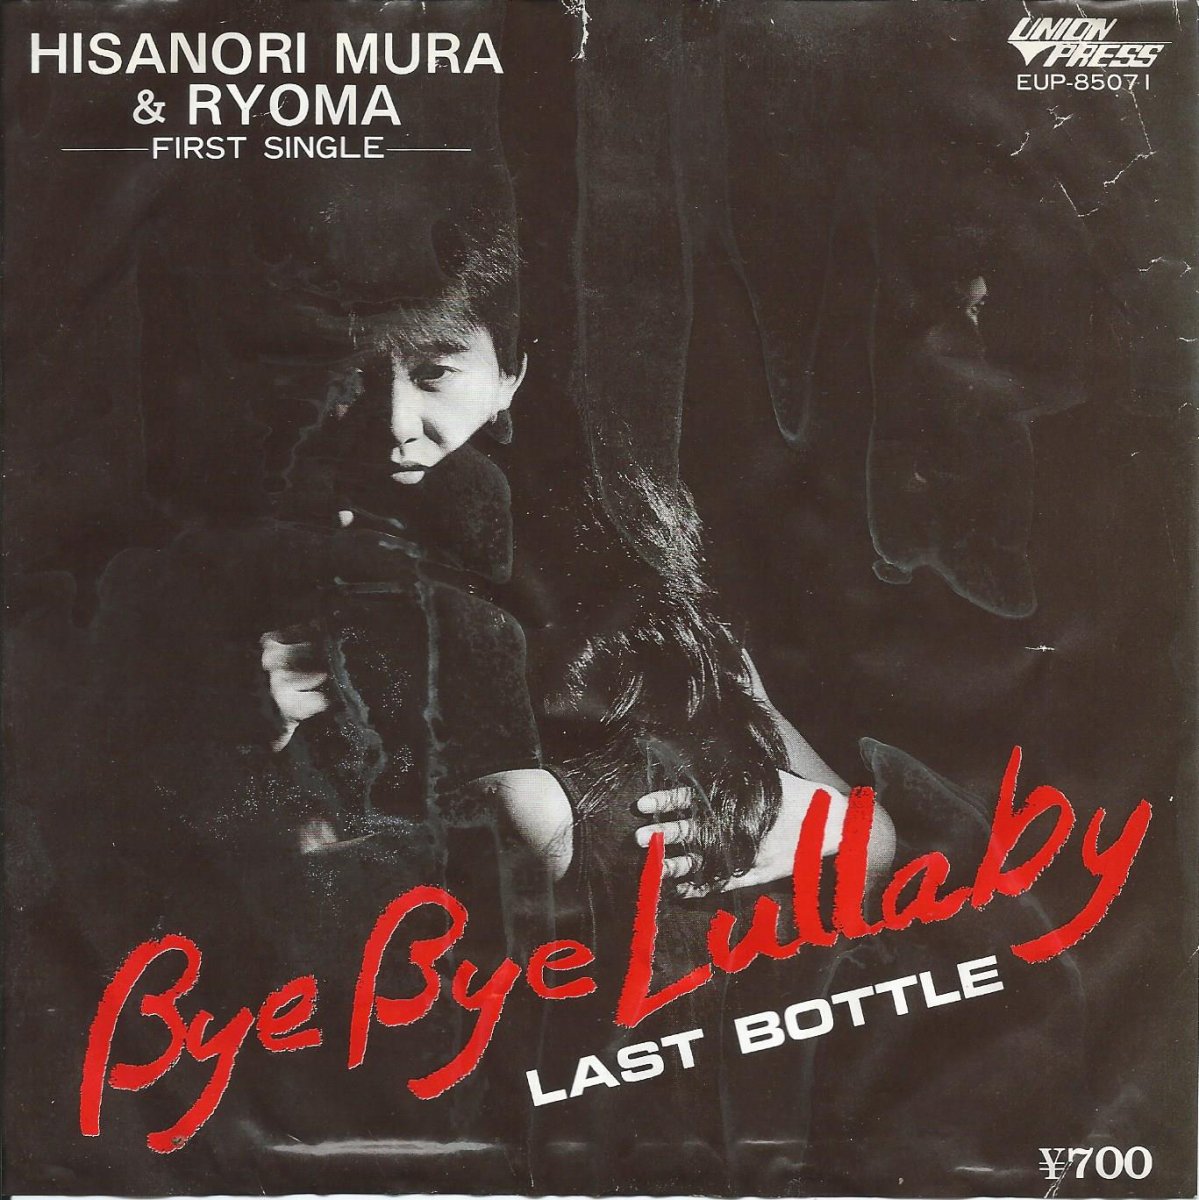 村久範 & 竜馬 HISANORI MURA & RYOMA / BYE BYE LULLABY / LAST BOTTLE (7